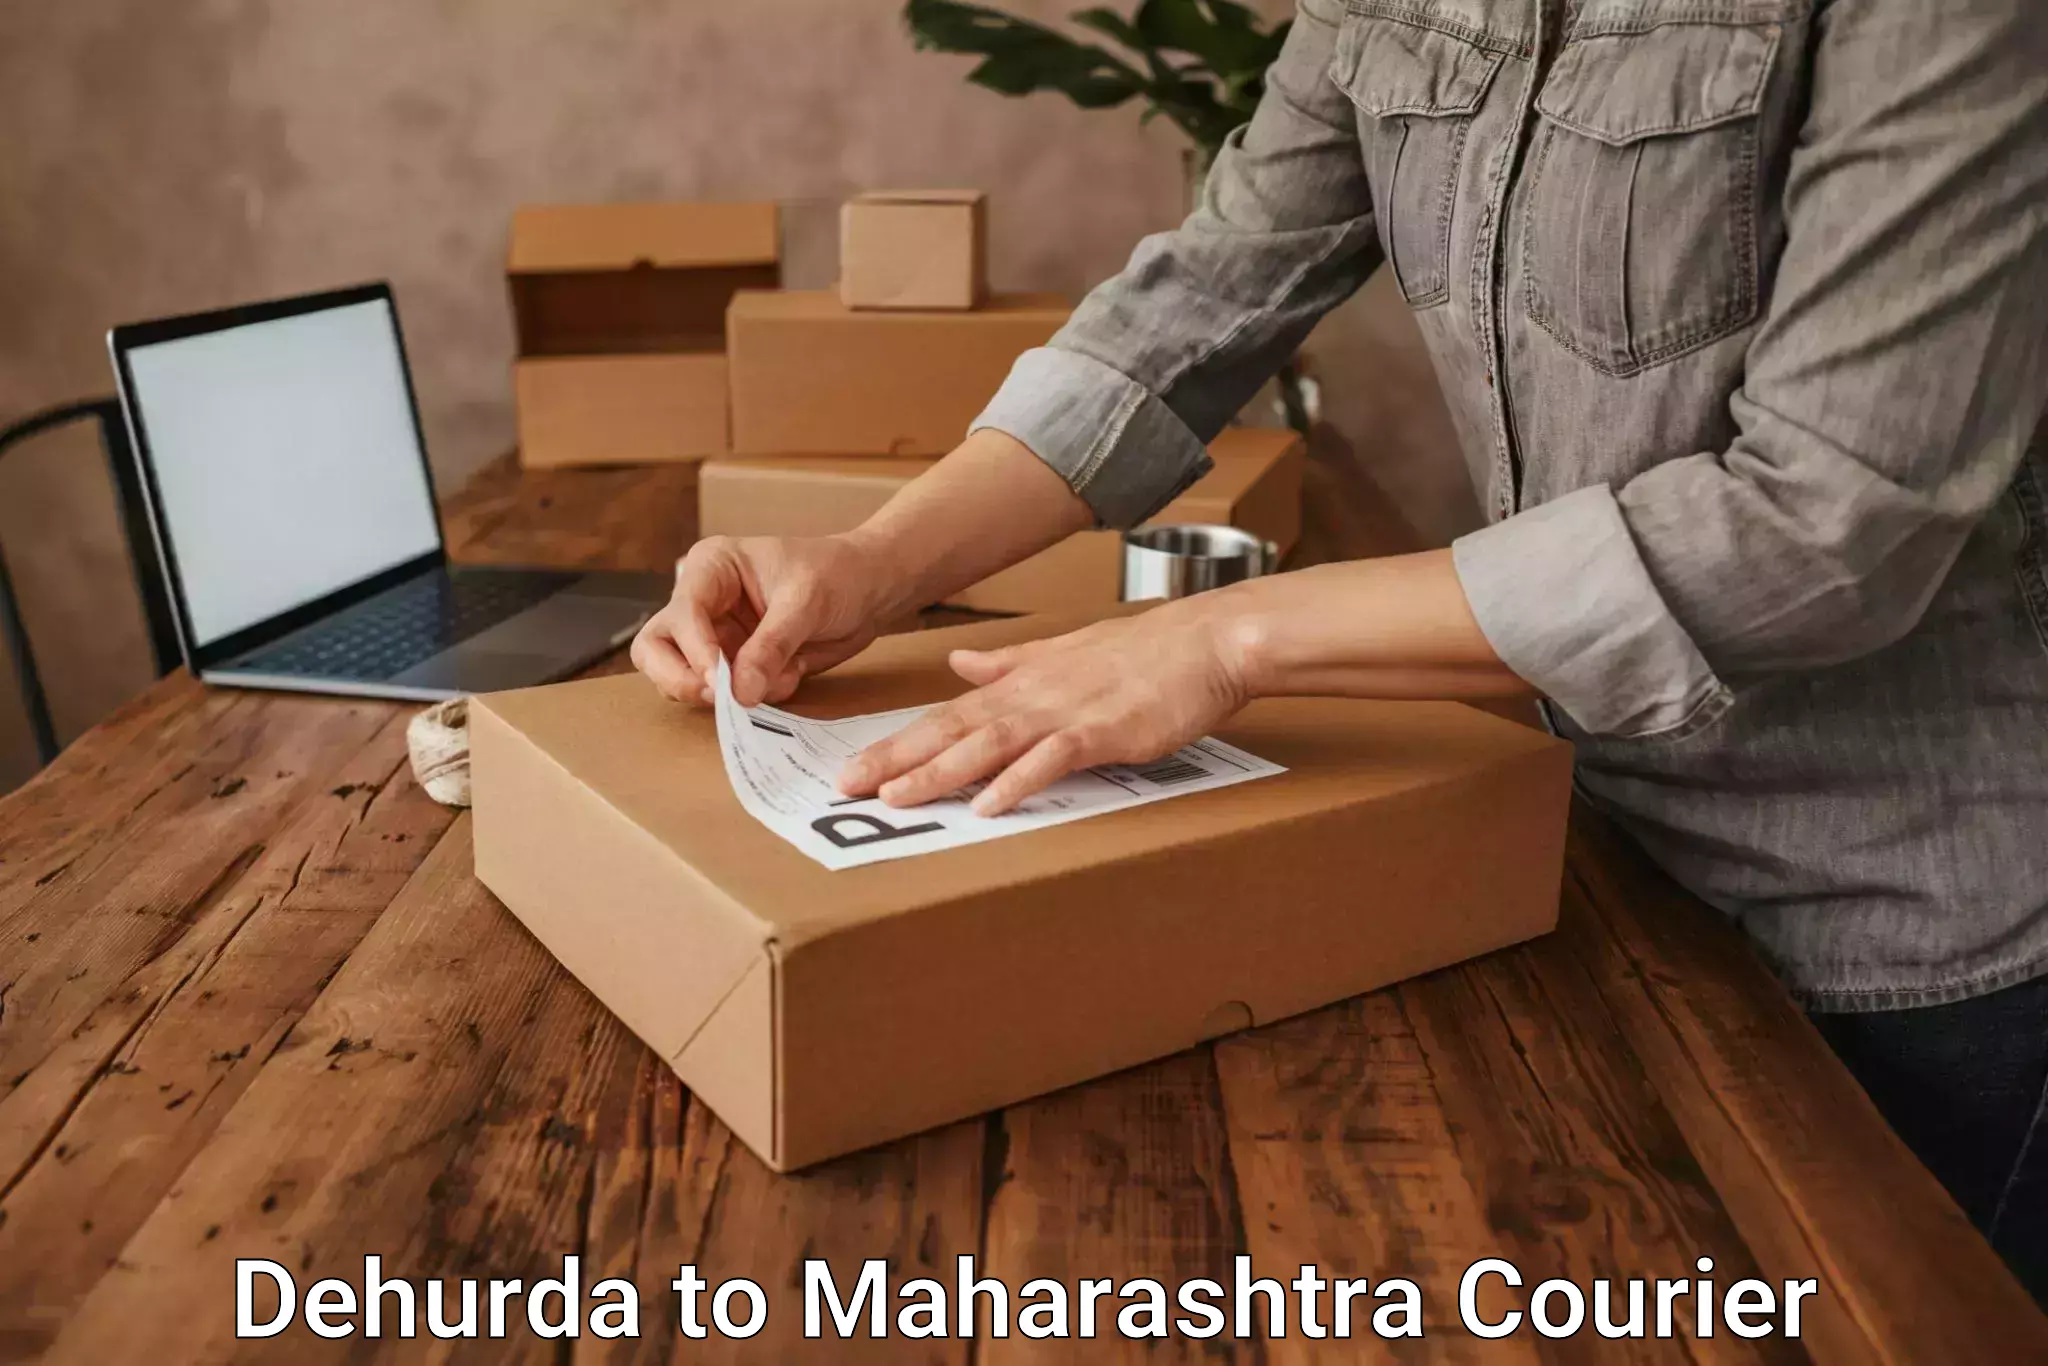 Bulk courier orders Dehurda to Shrirampur